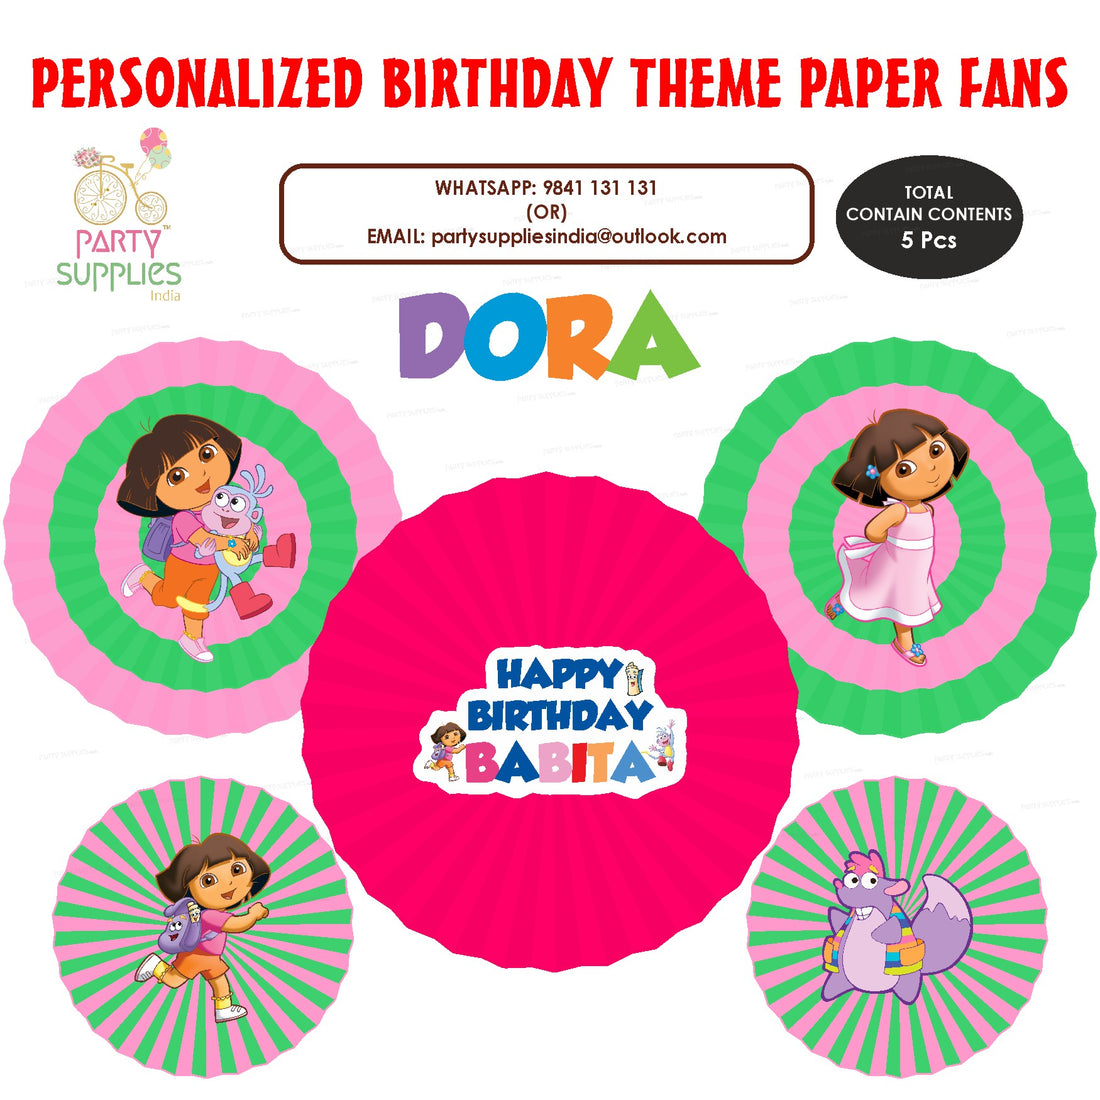 Dora the Explorer Paper Fan